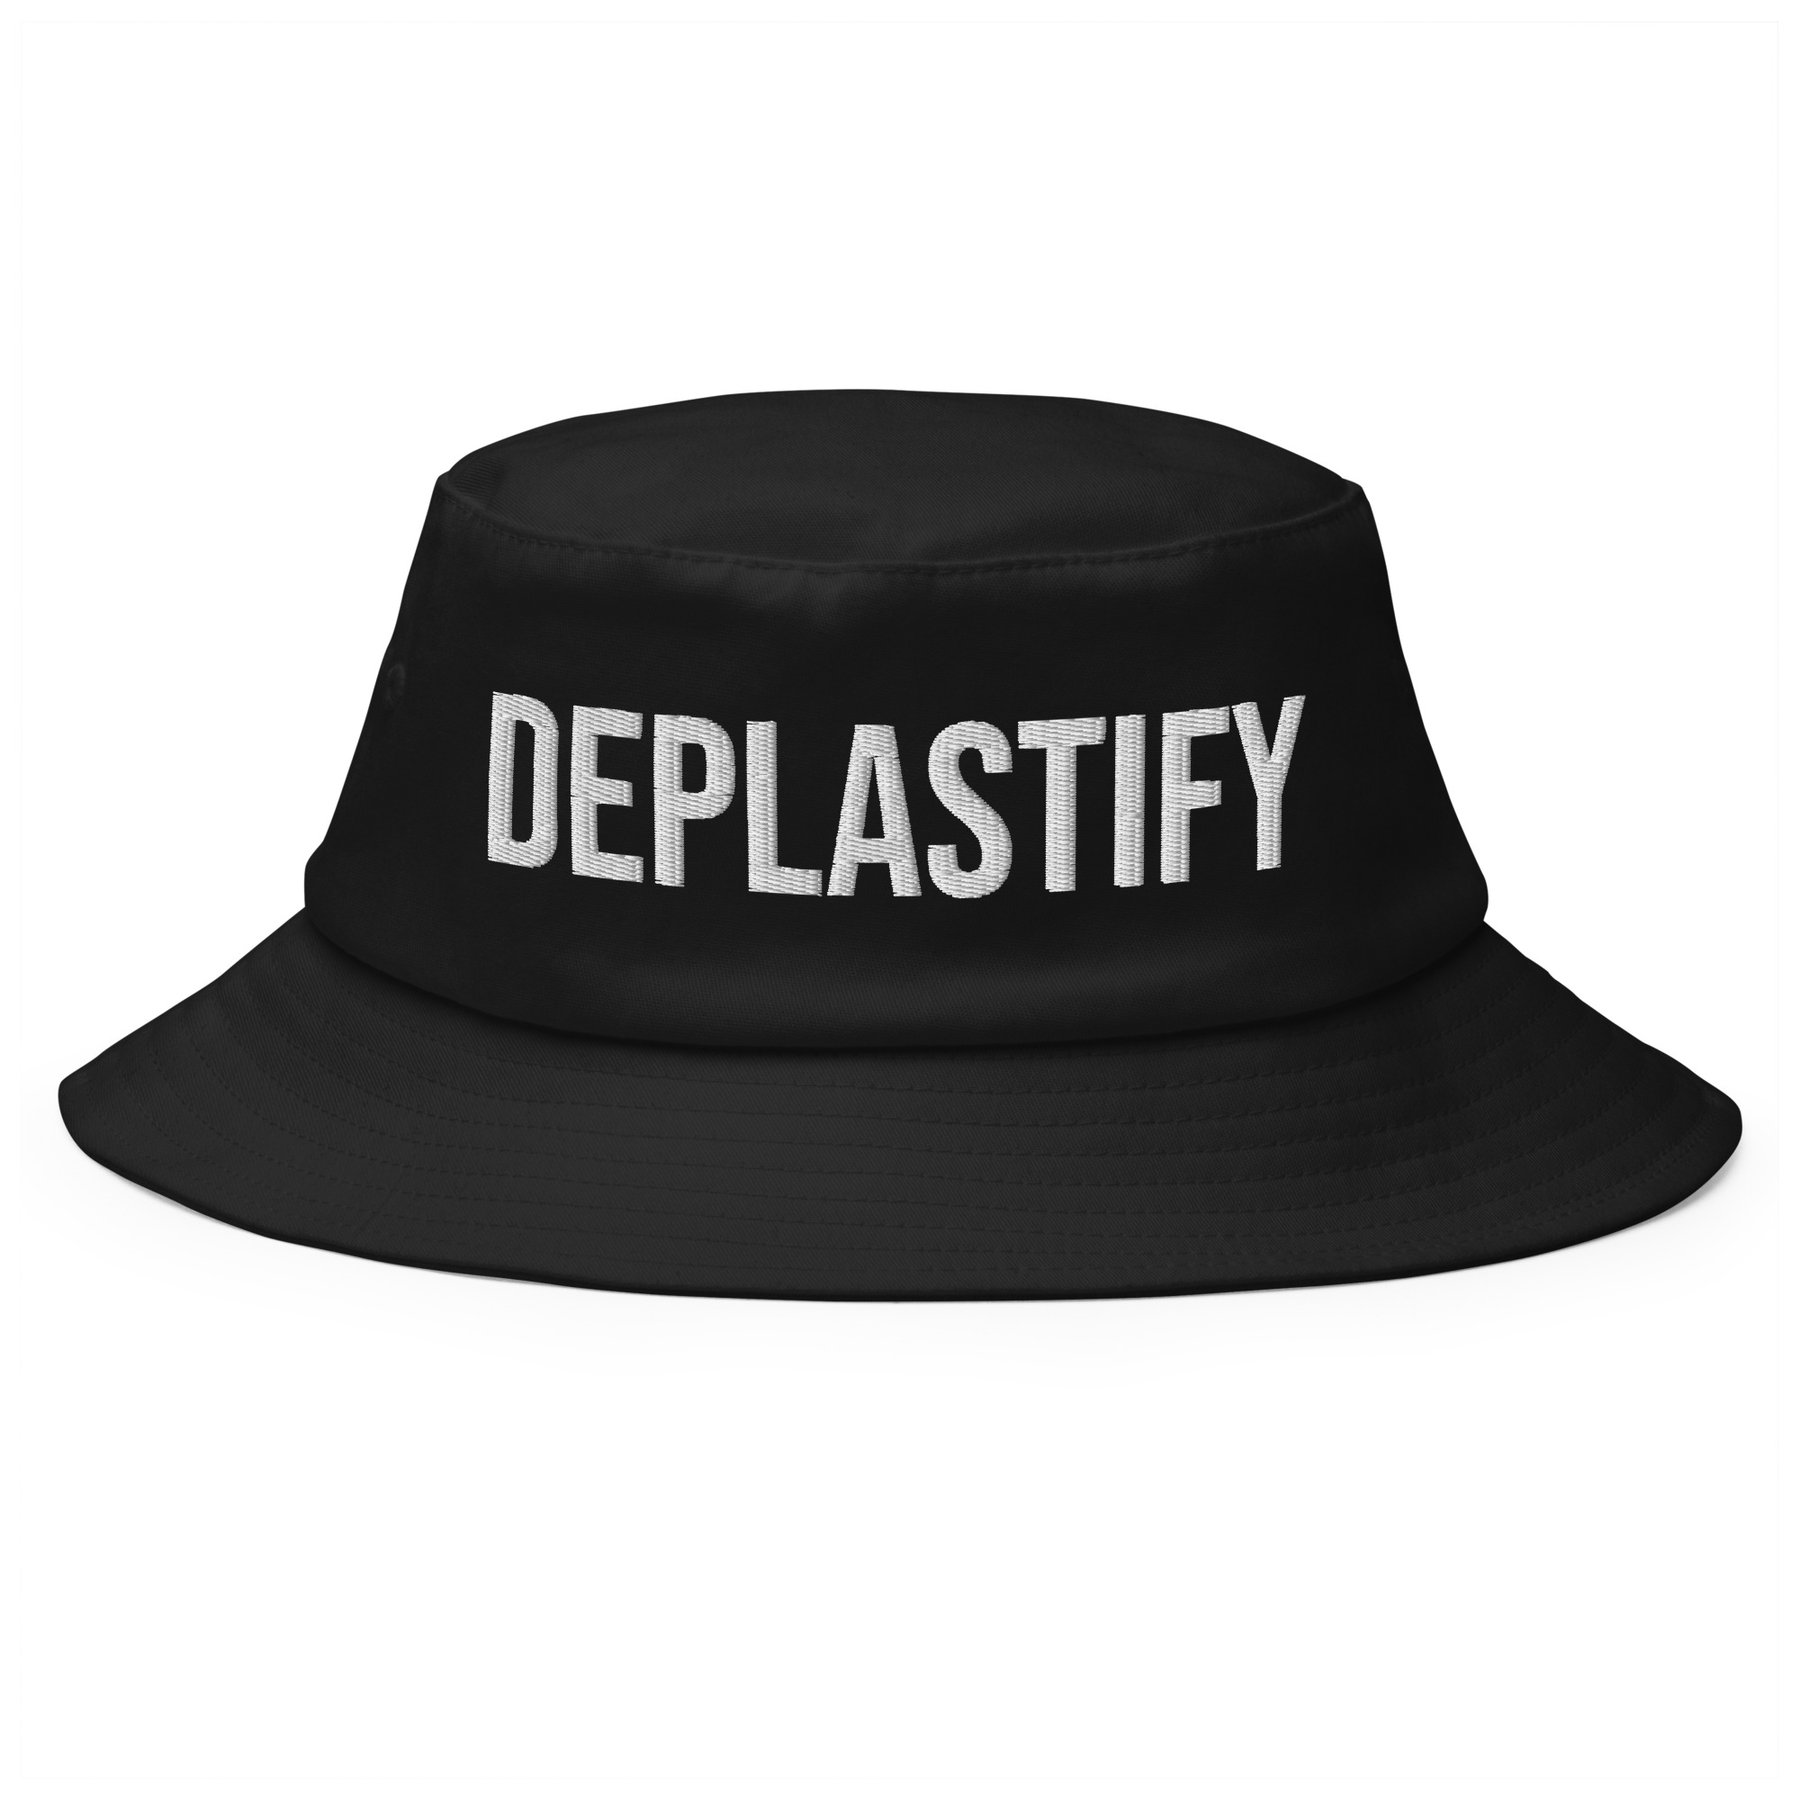 STORE MEGAGLAM Hat Flexfit Bucket THE | DEPLASTIFY